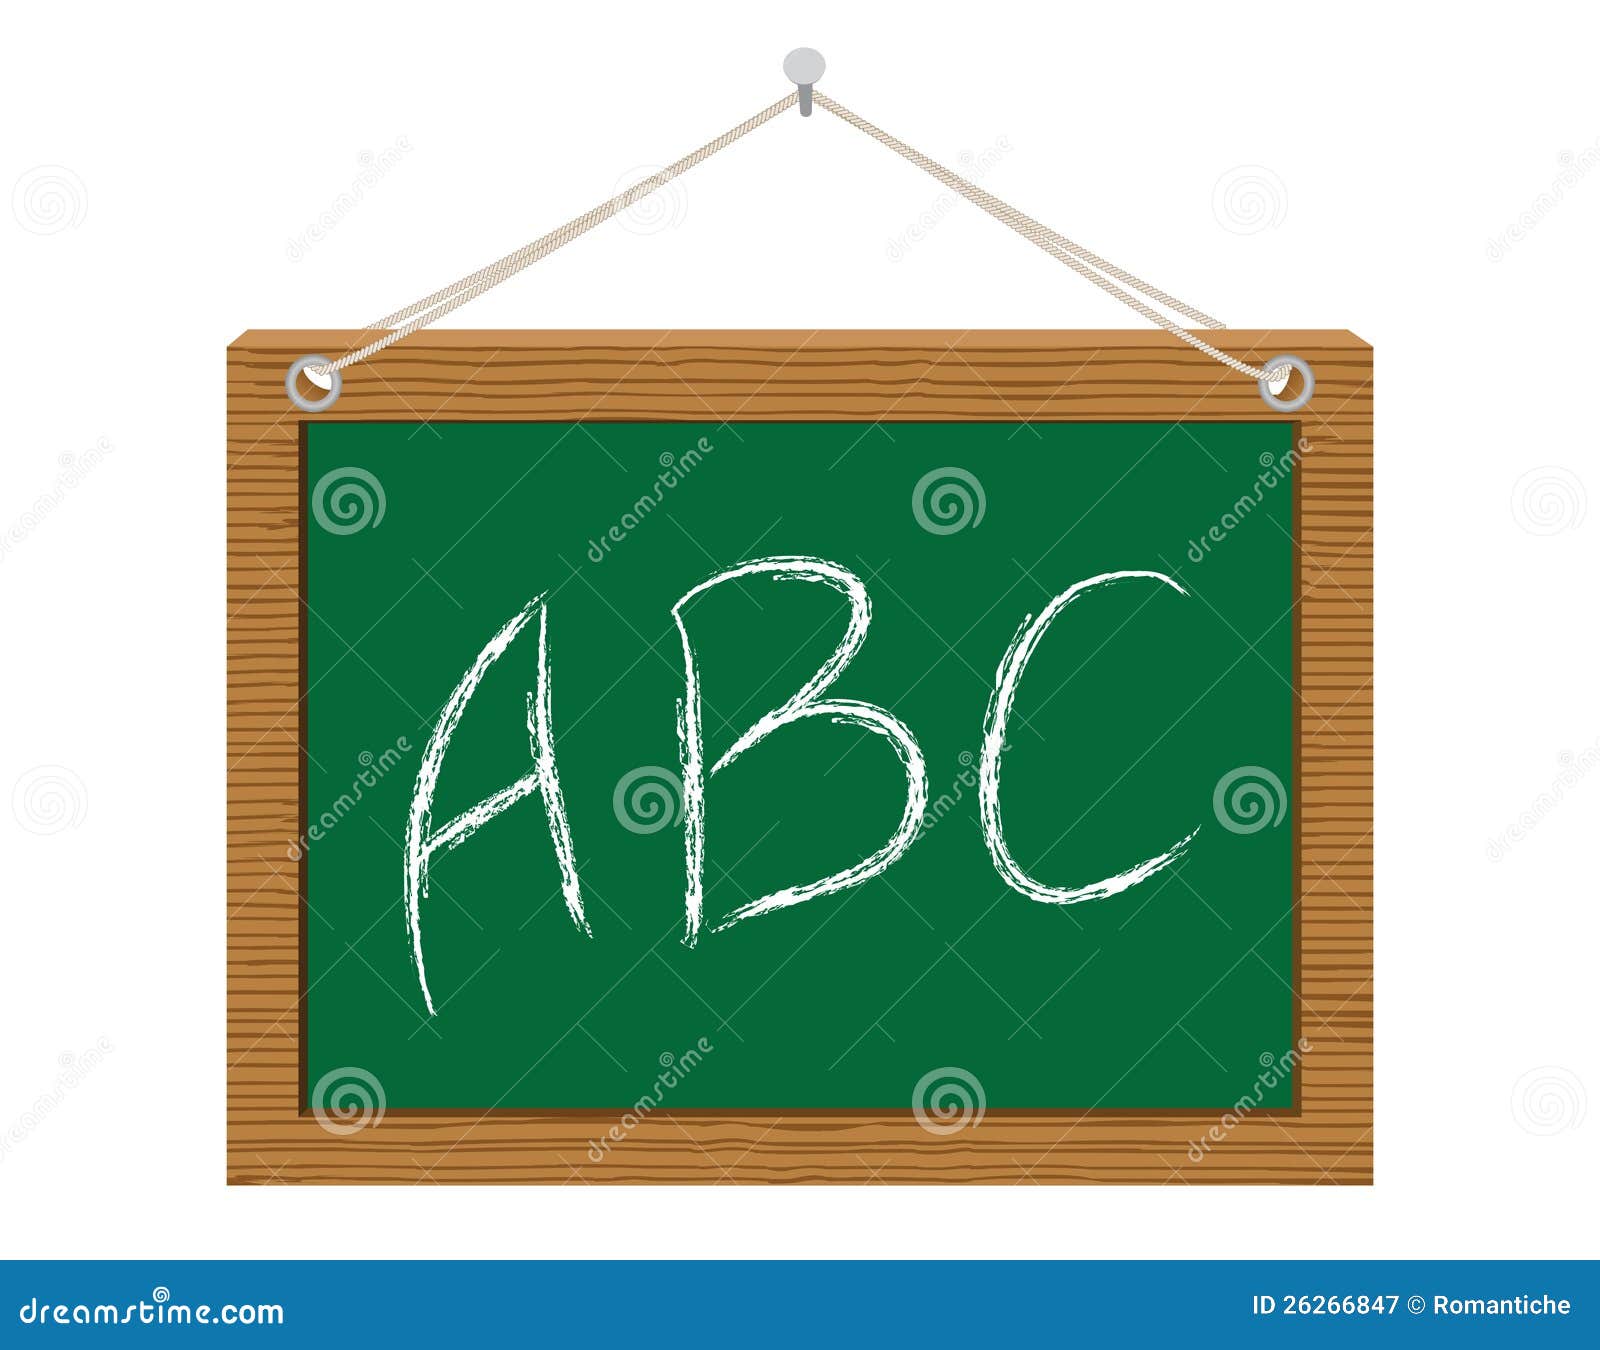 abc chalkboard clipart - photo #40